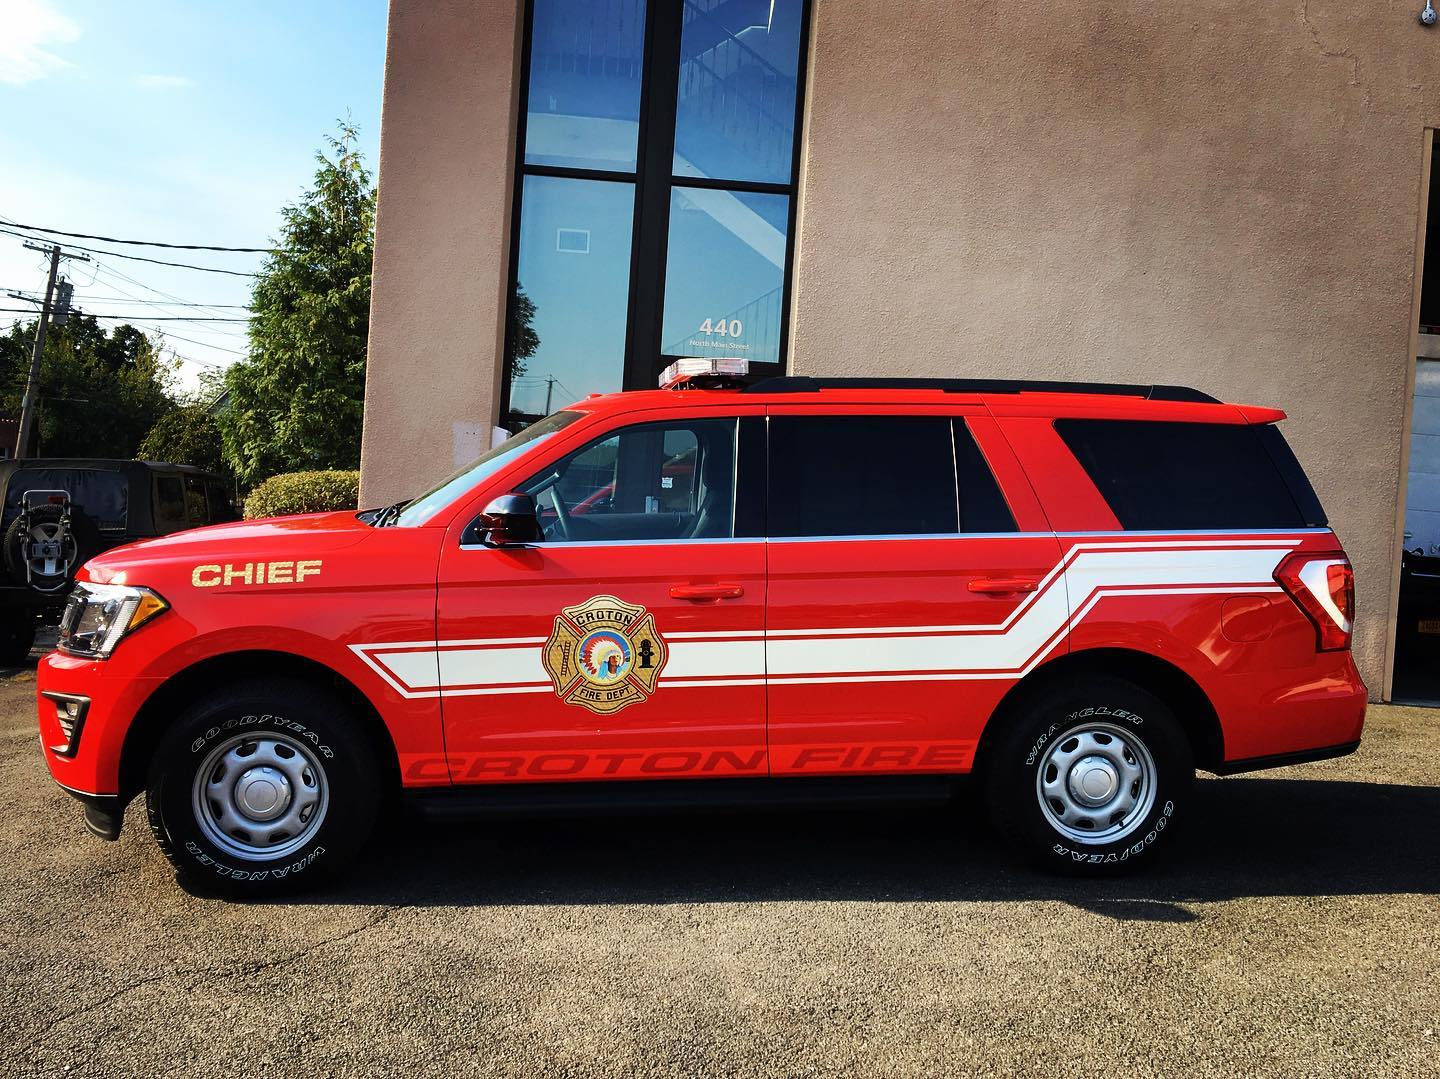 Ford Expedition Fireman SUV Wrap @VinniePinstripe 440 N Main St. Port Chester, NY 10573 E.JPG